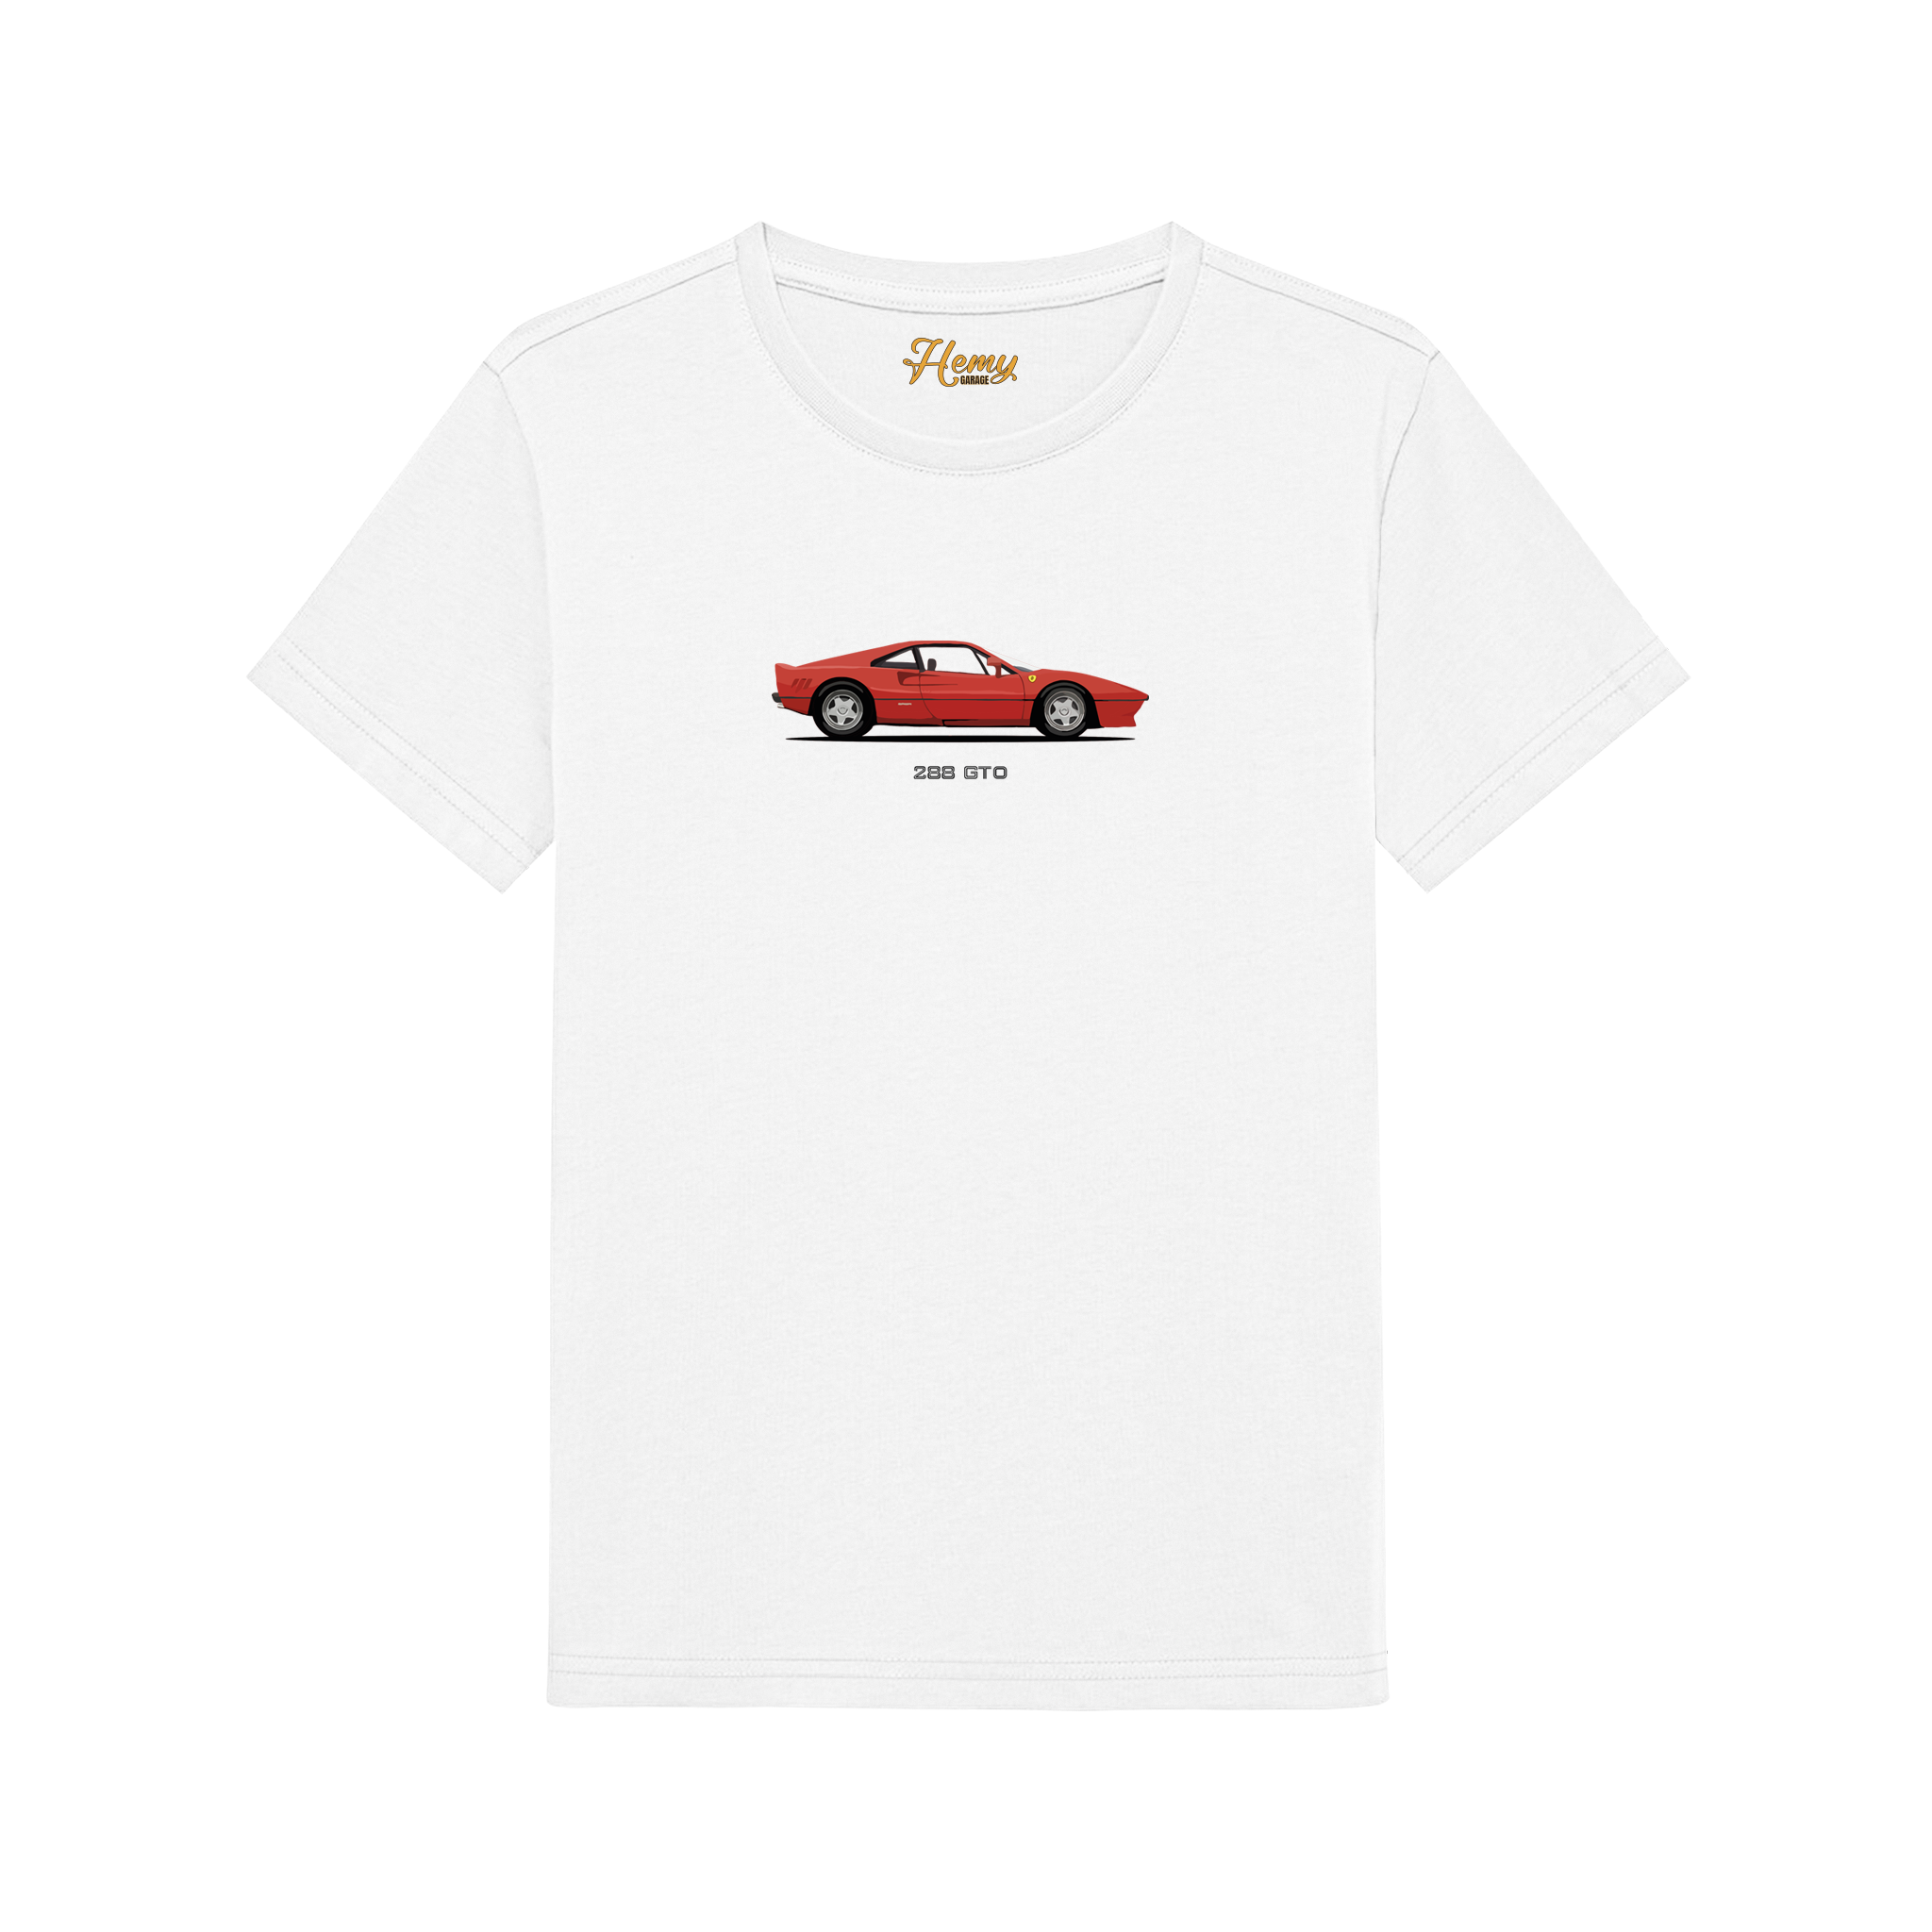 288 GTO - Çocuk T-Shirt